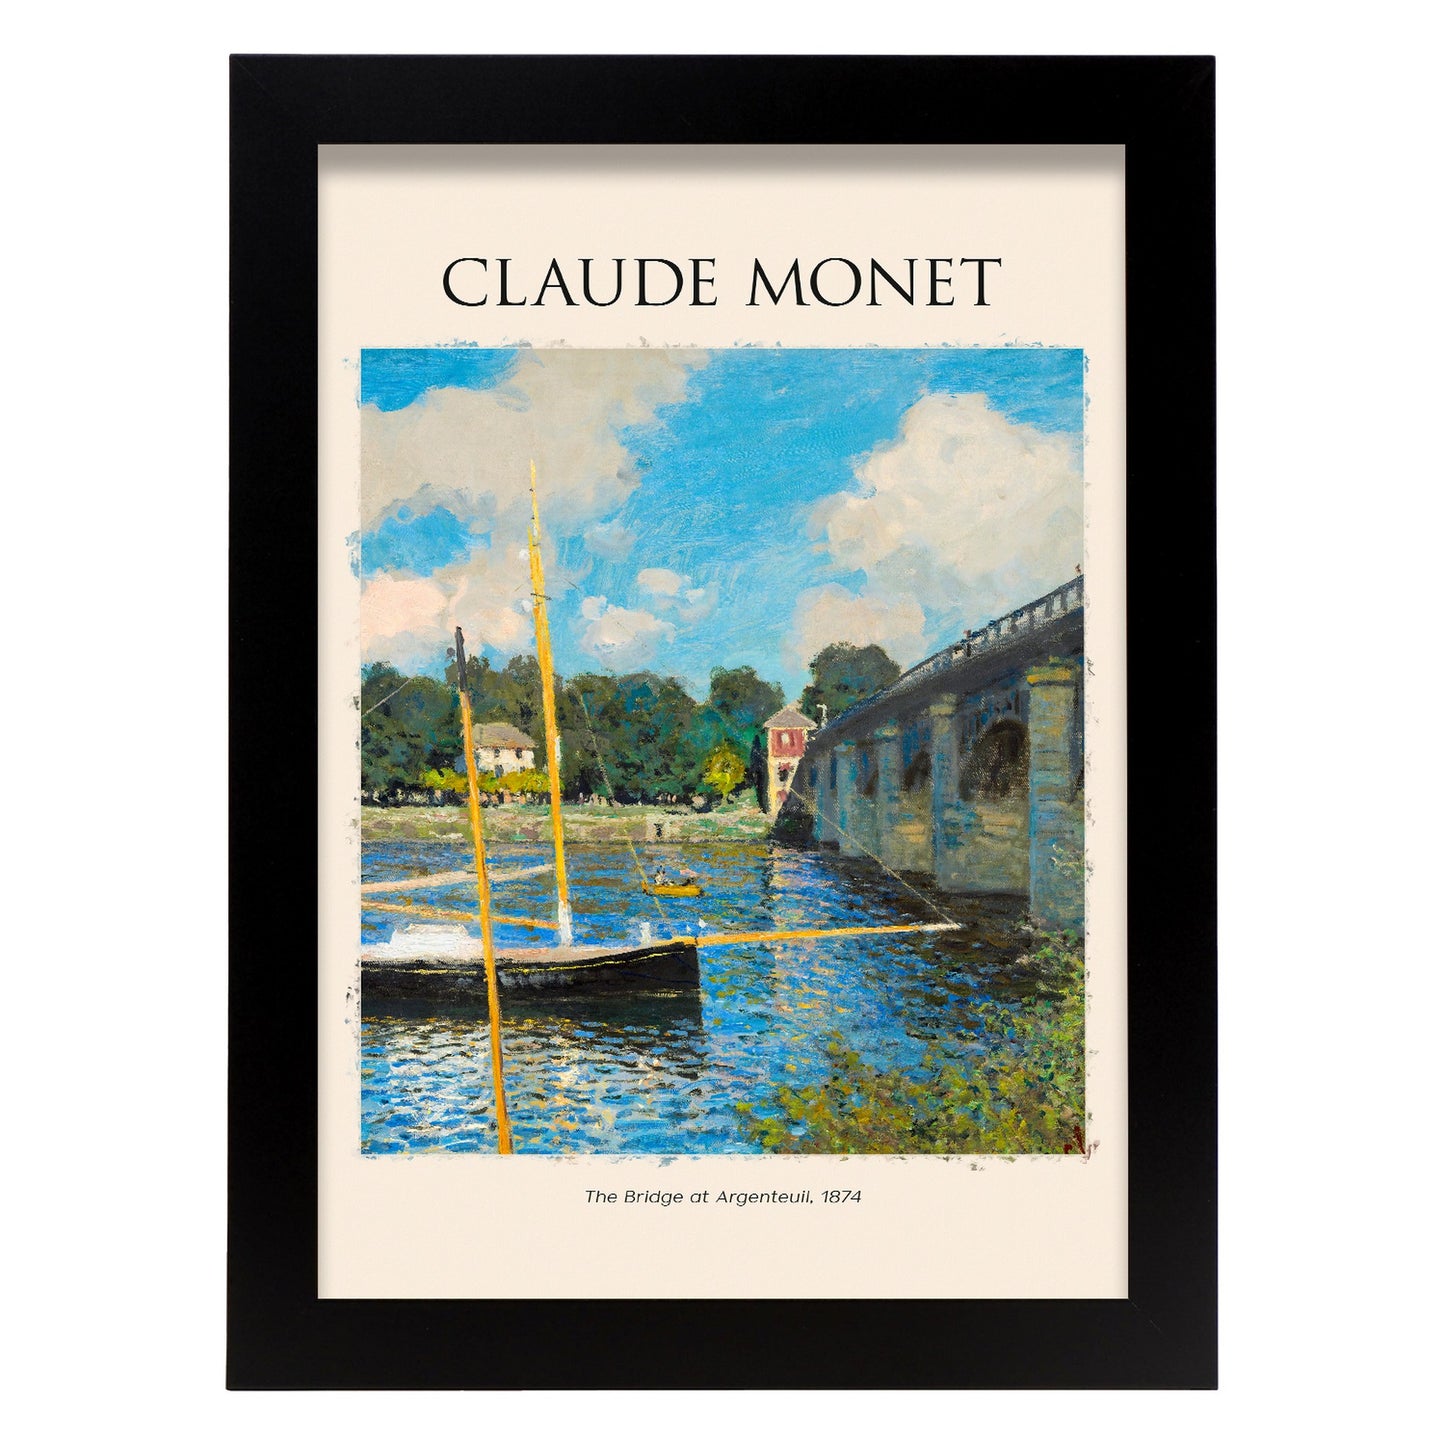 Lámina de Puente en Argenteuil inspirada en Claude Monet